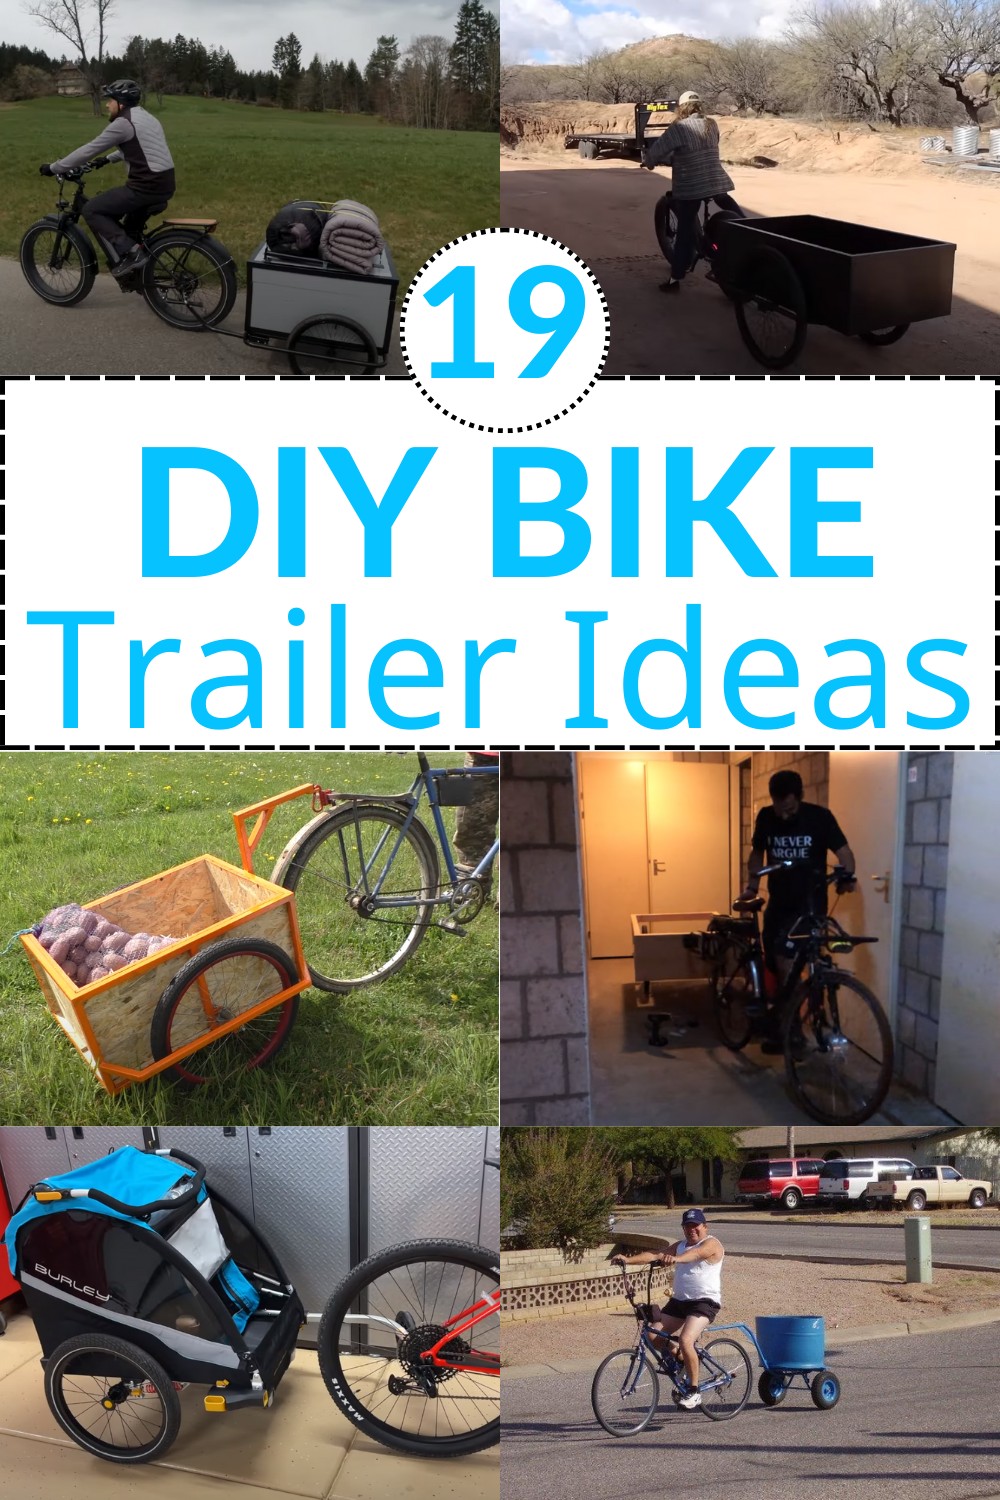 DIY Bike Trailer Ideas